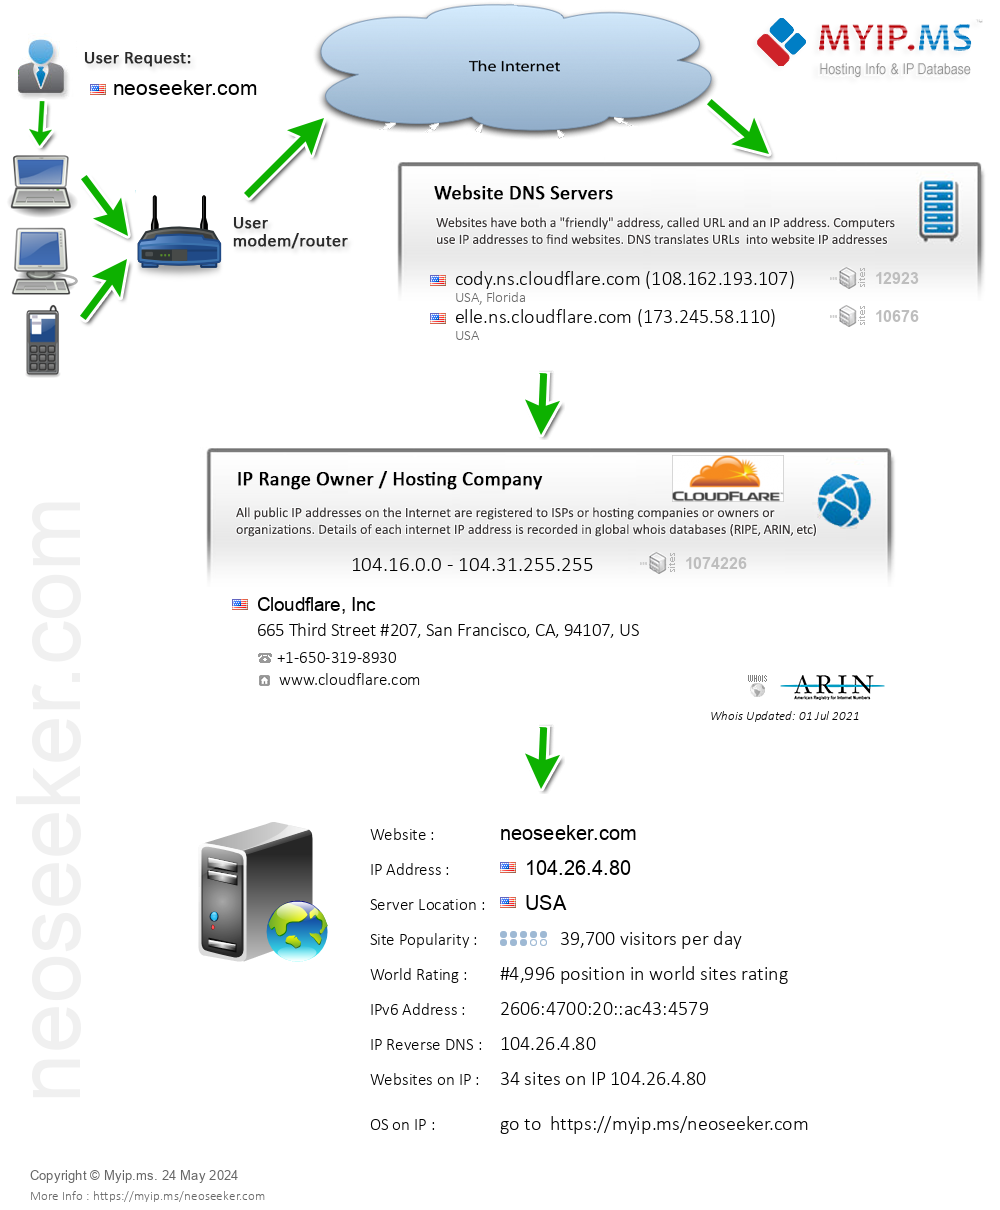 Neoseeker.com - Website Hosting Visual IP Diagram